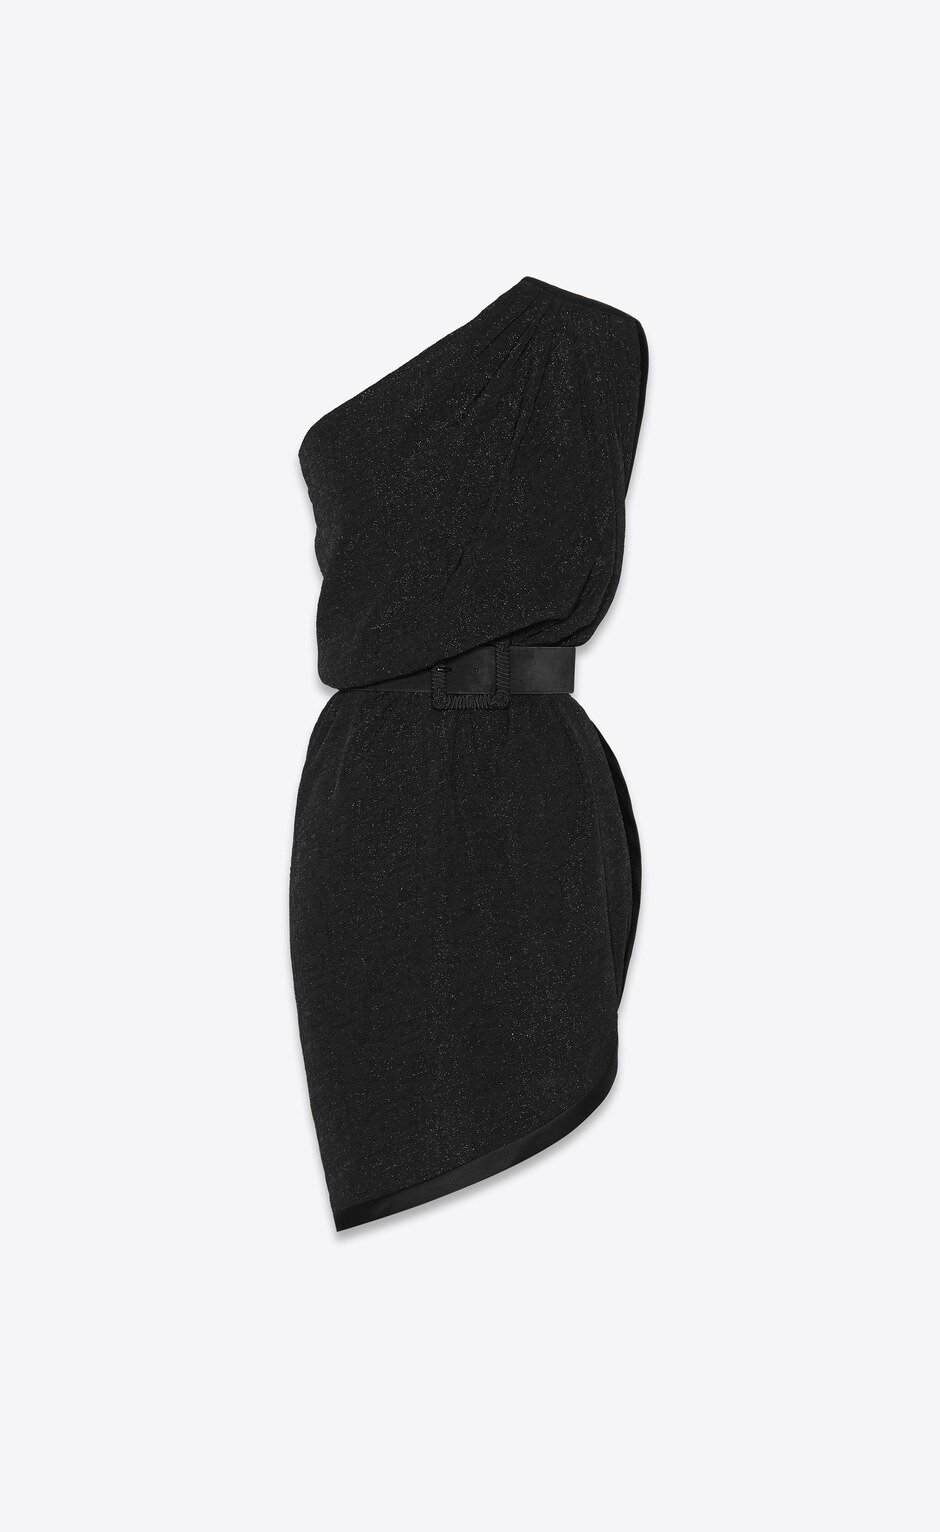 Saint Laurent One-Shoulder Asymmetrical Dress in Shiny Black Jacquard.jpg